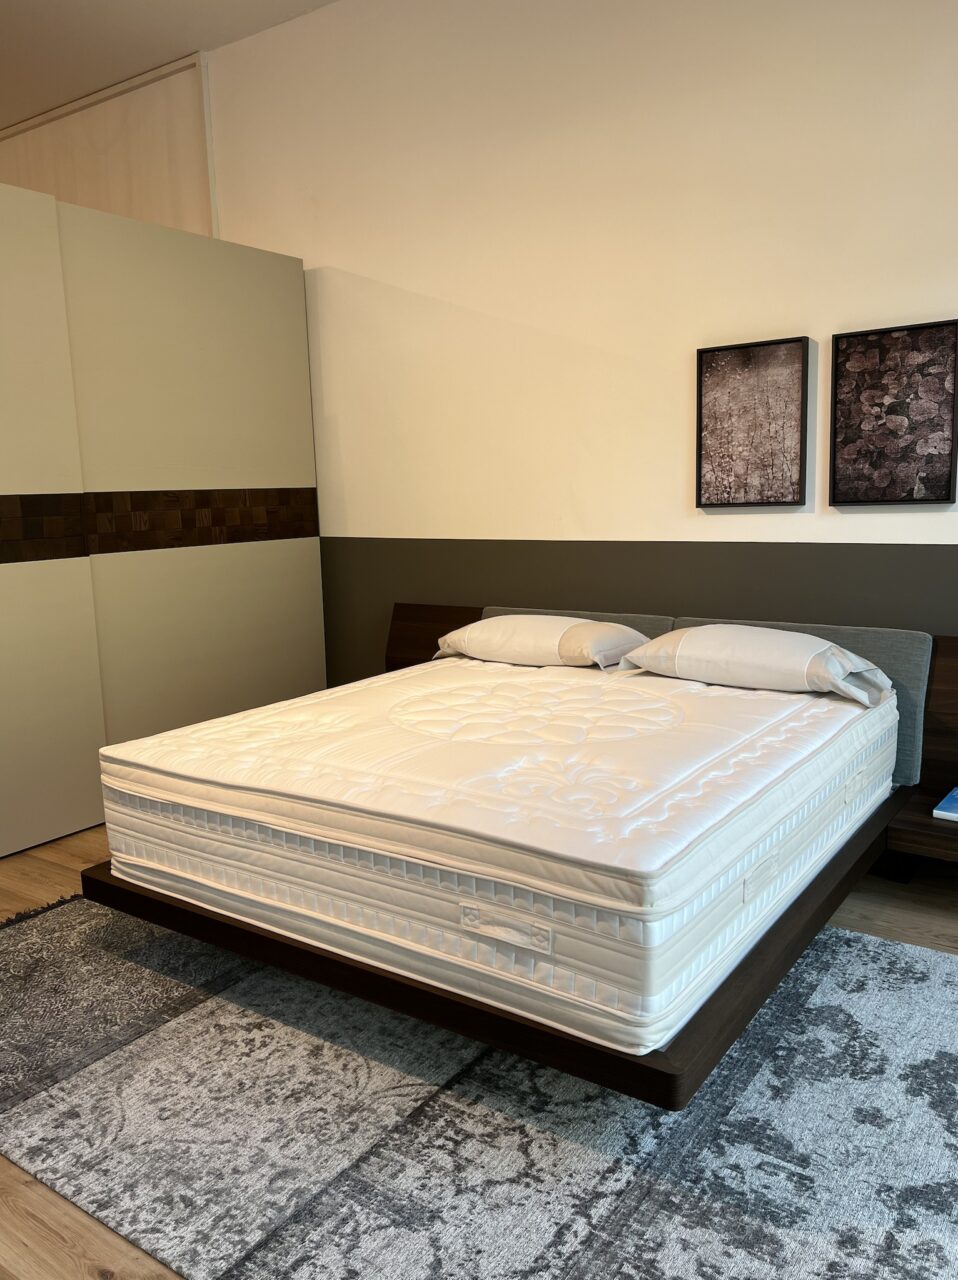 Tomasella bedroom 1